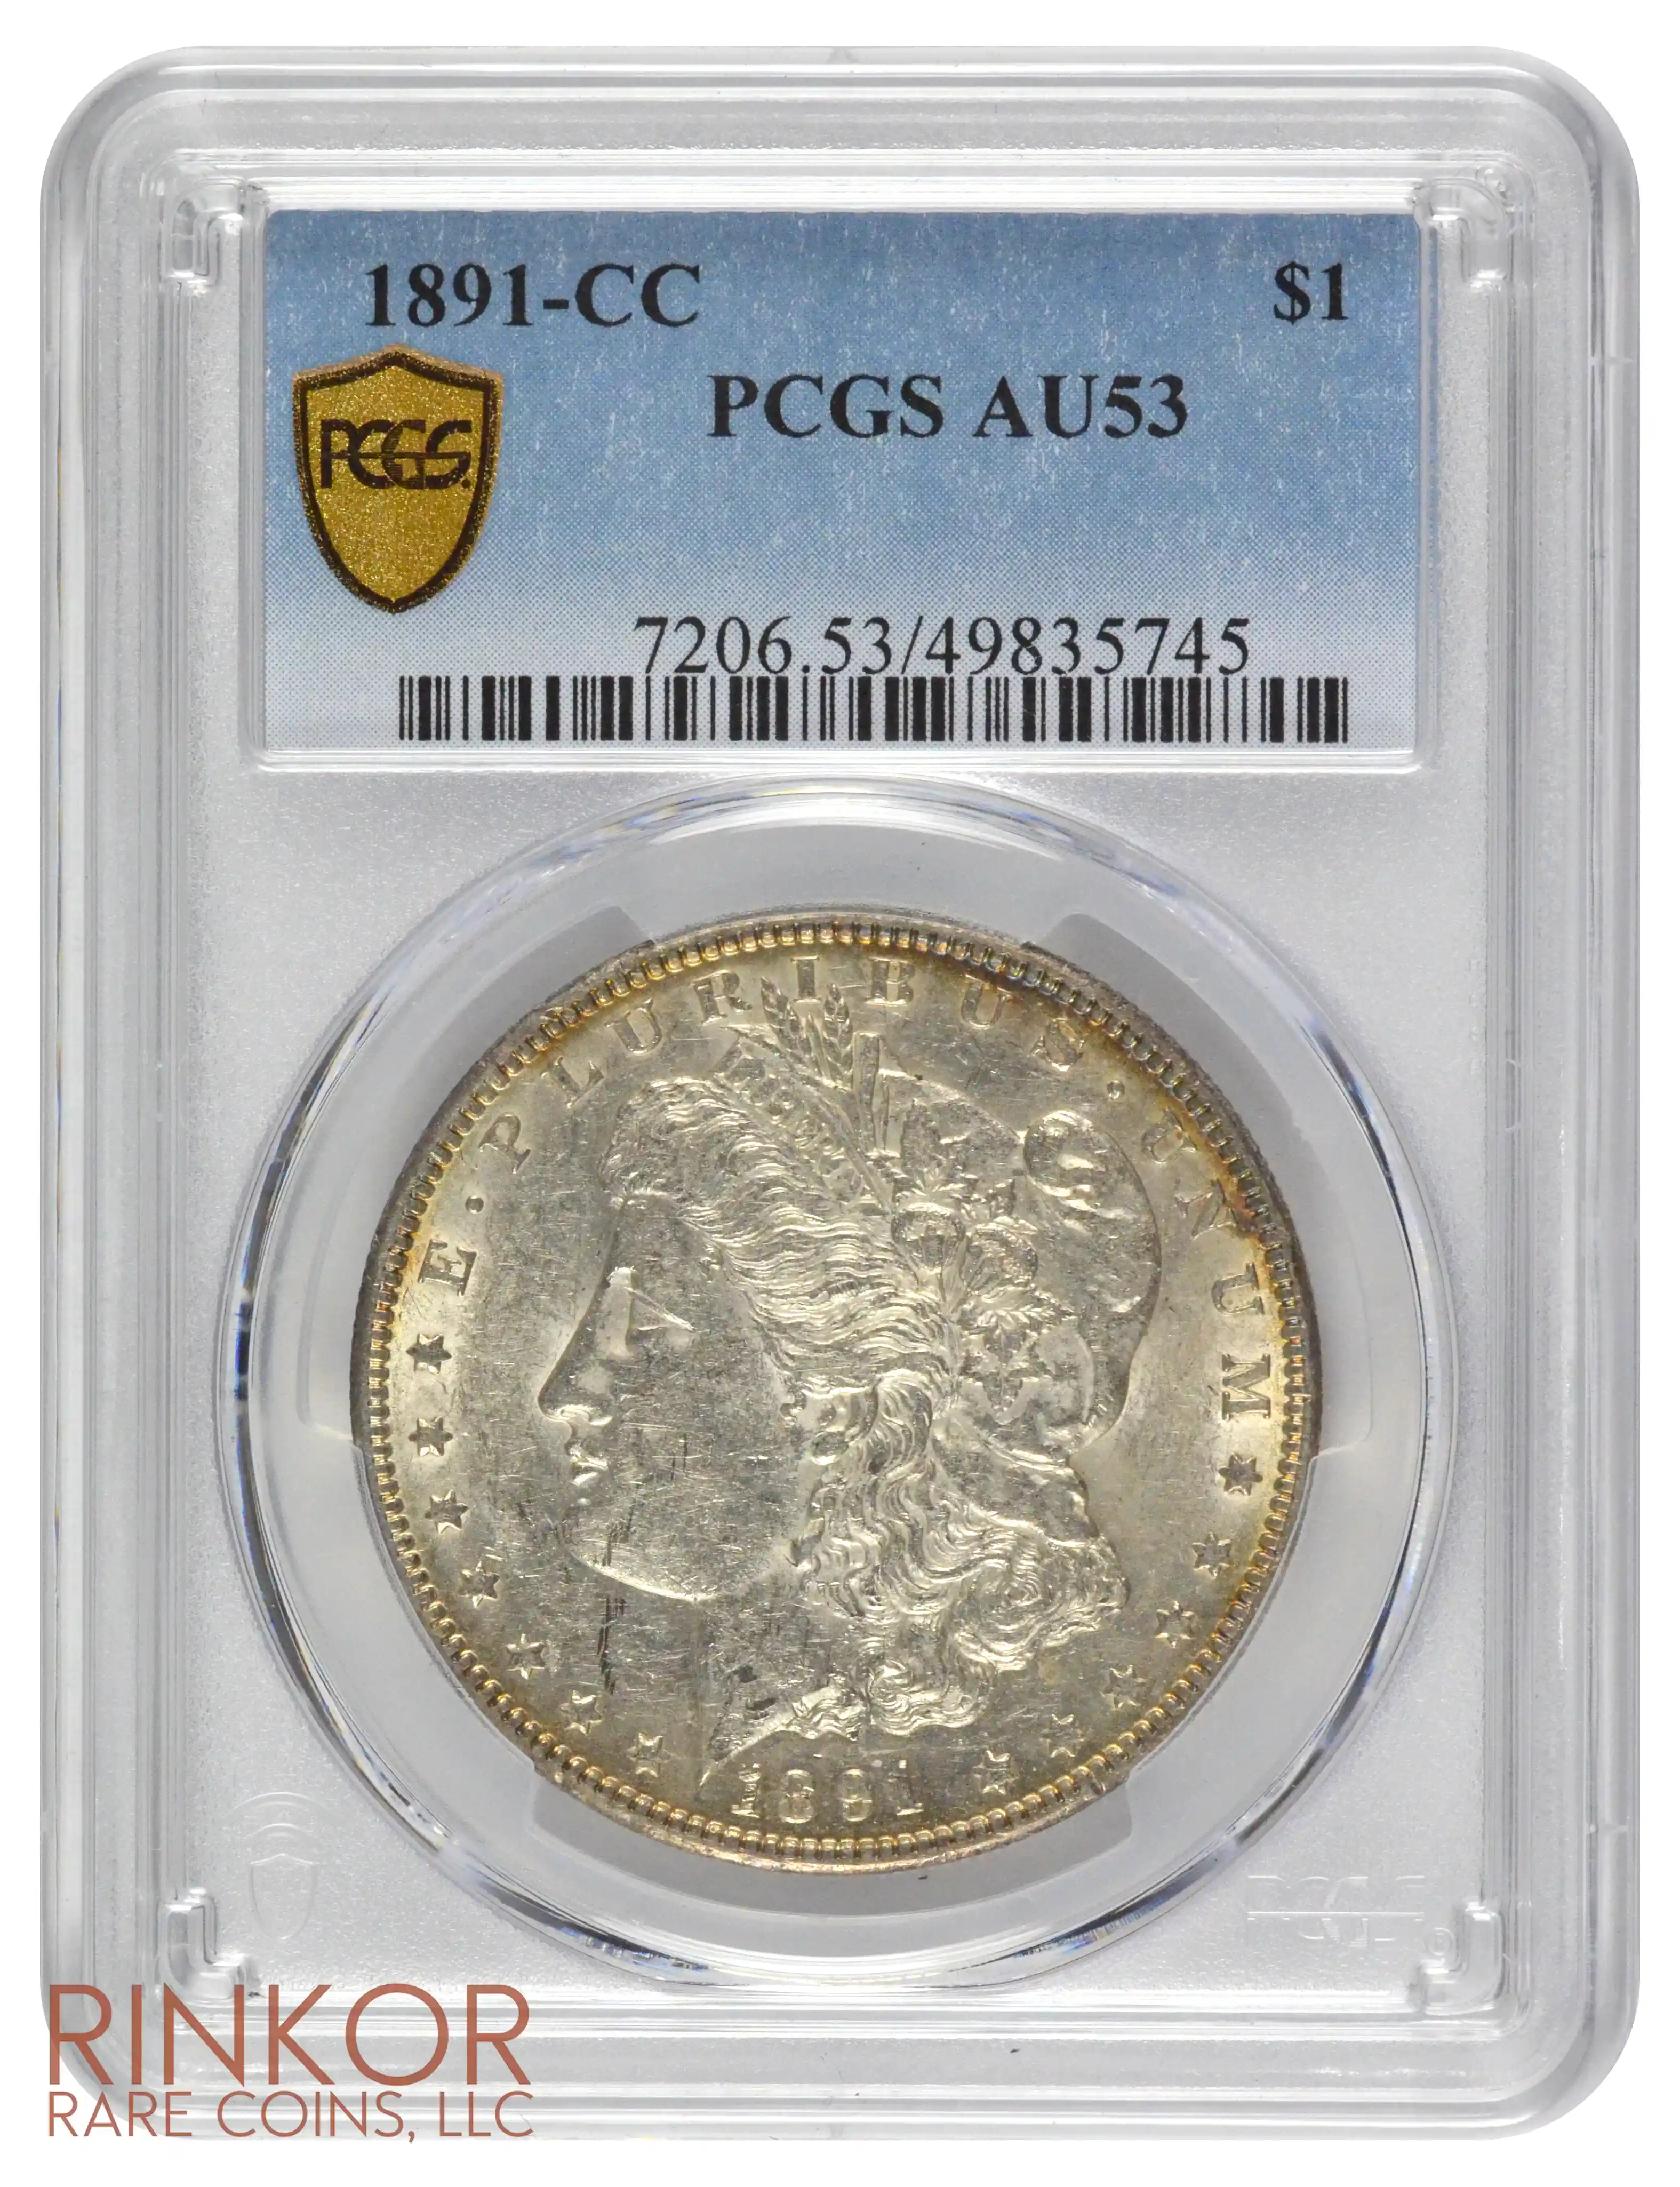 1891-CC $1 PCGS AU-53